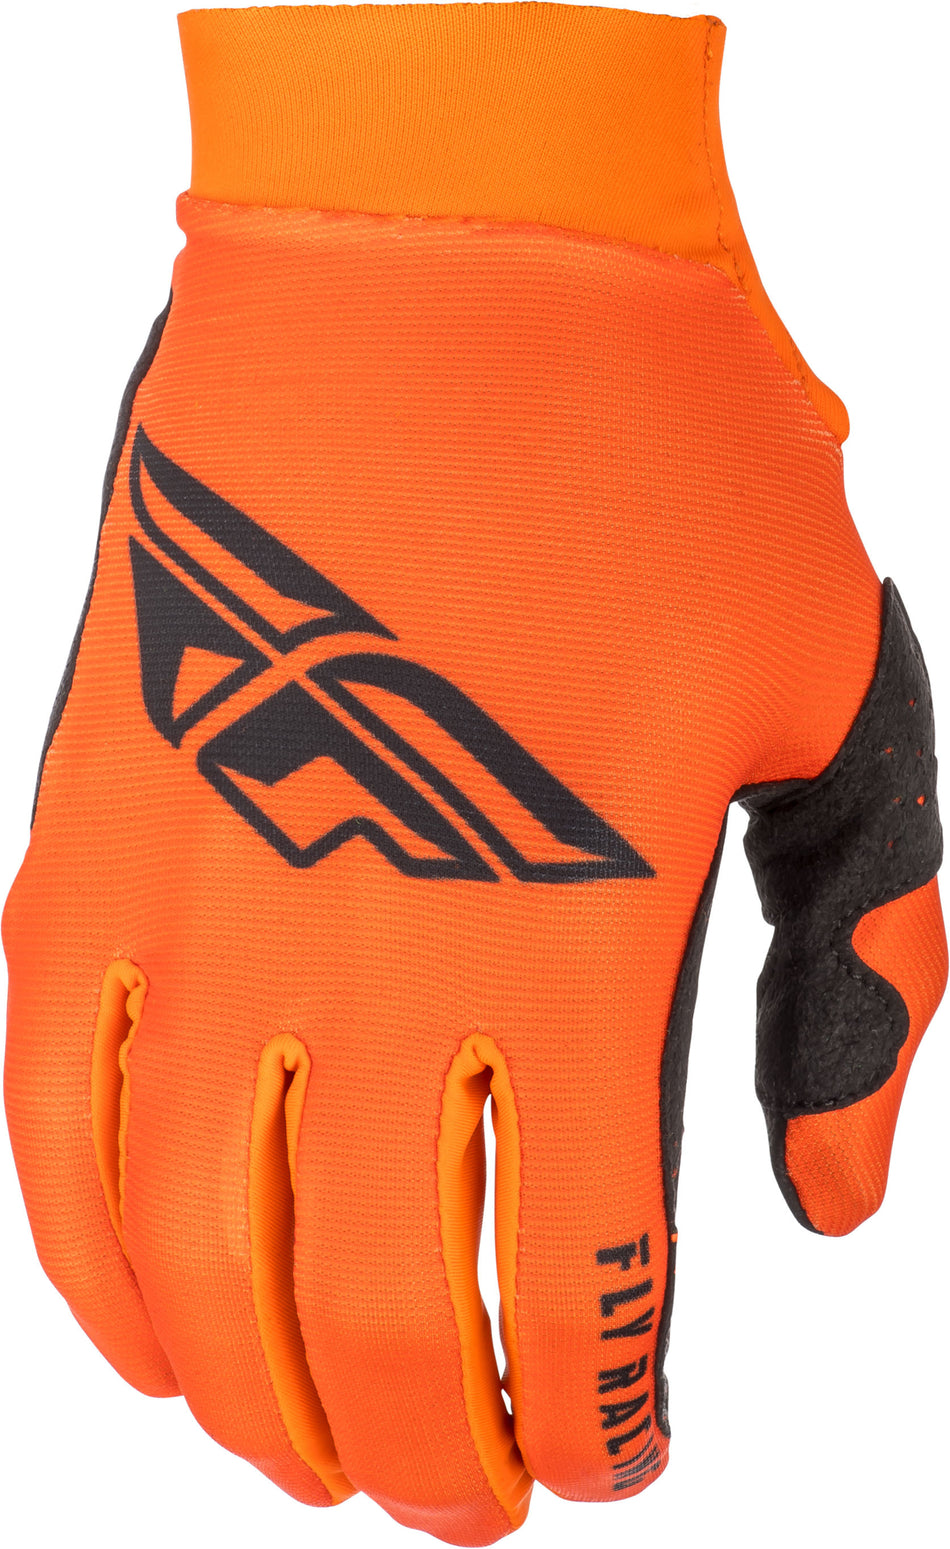 FLY RACING Pro Lite Gloves Orange/Black Sz 13 372-81713